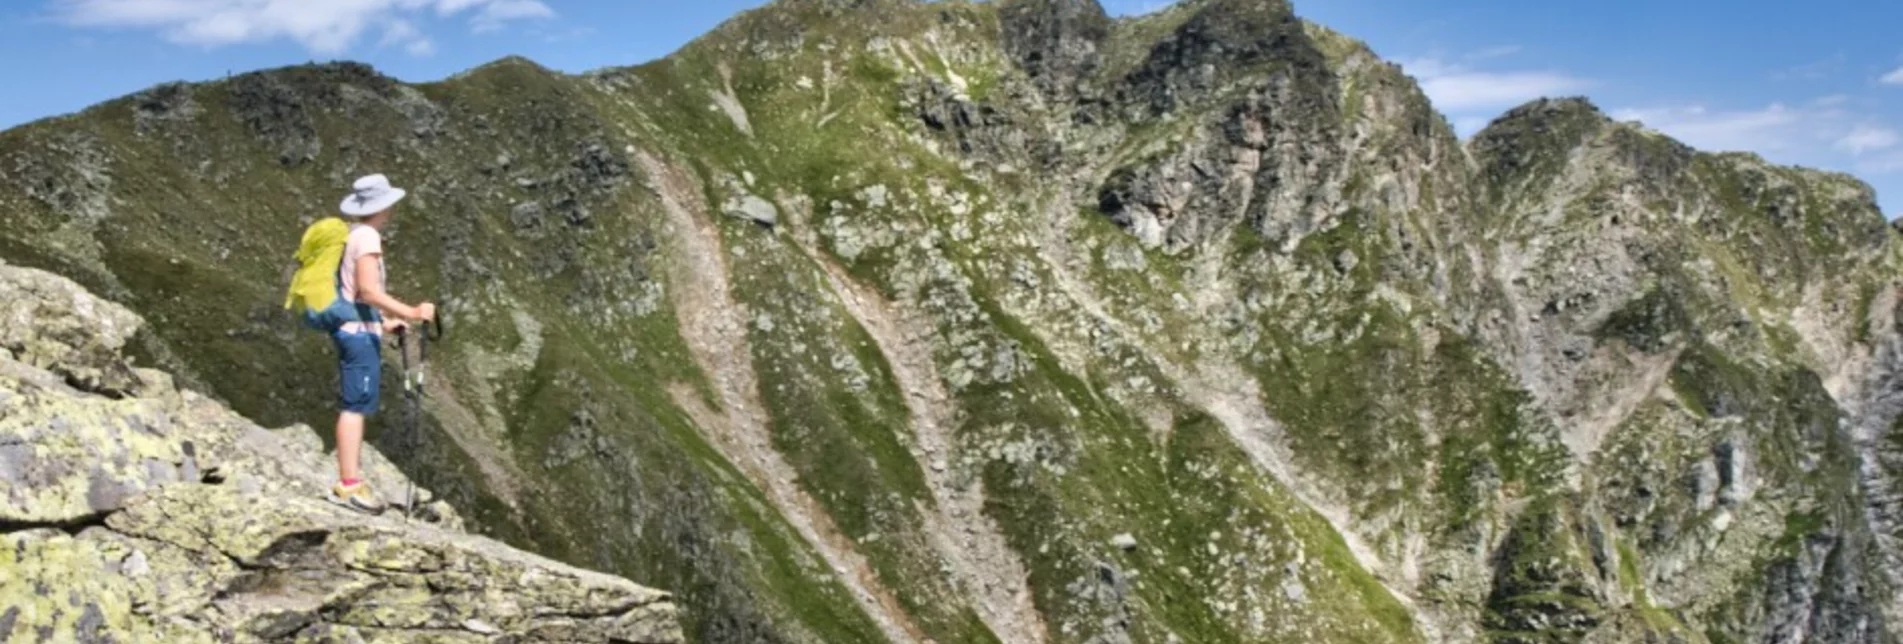 Hiking route Geierhaupt - Touren-Impression #1